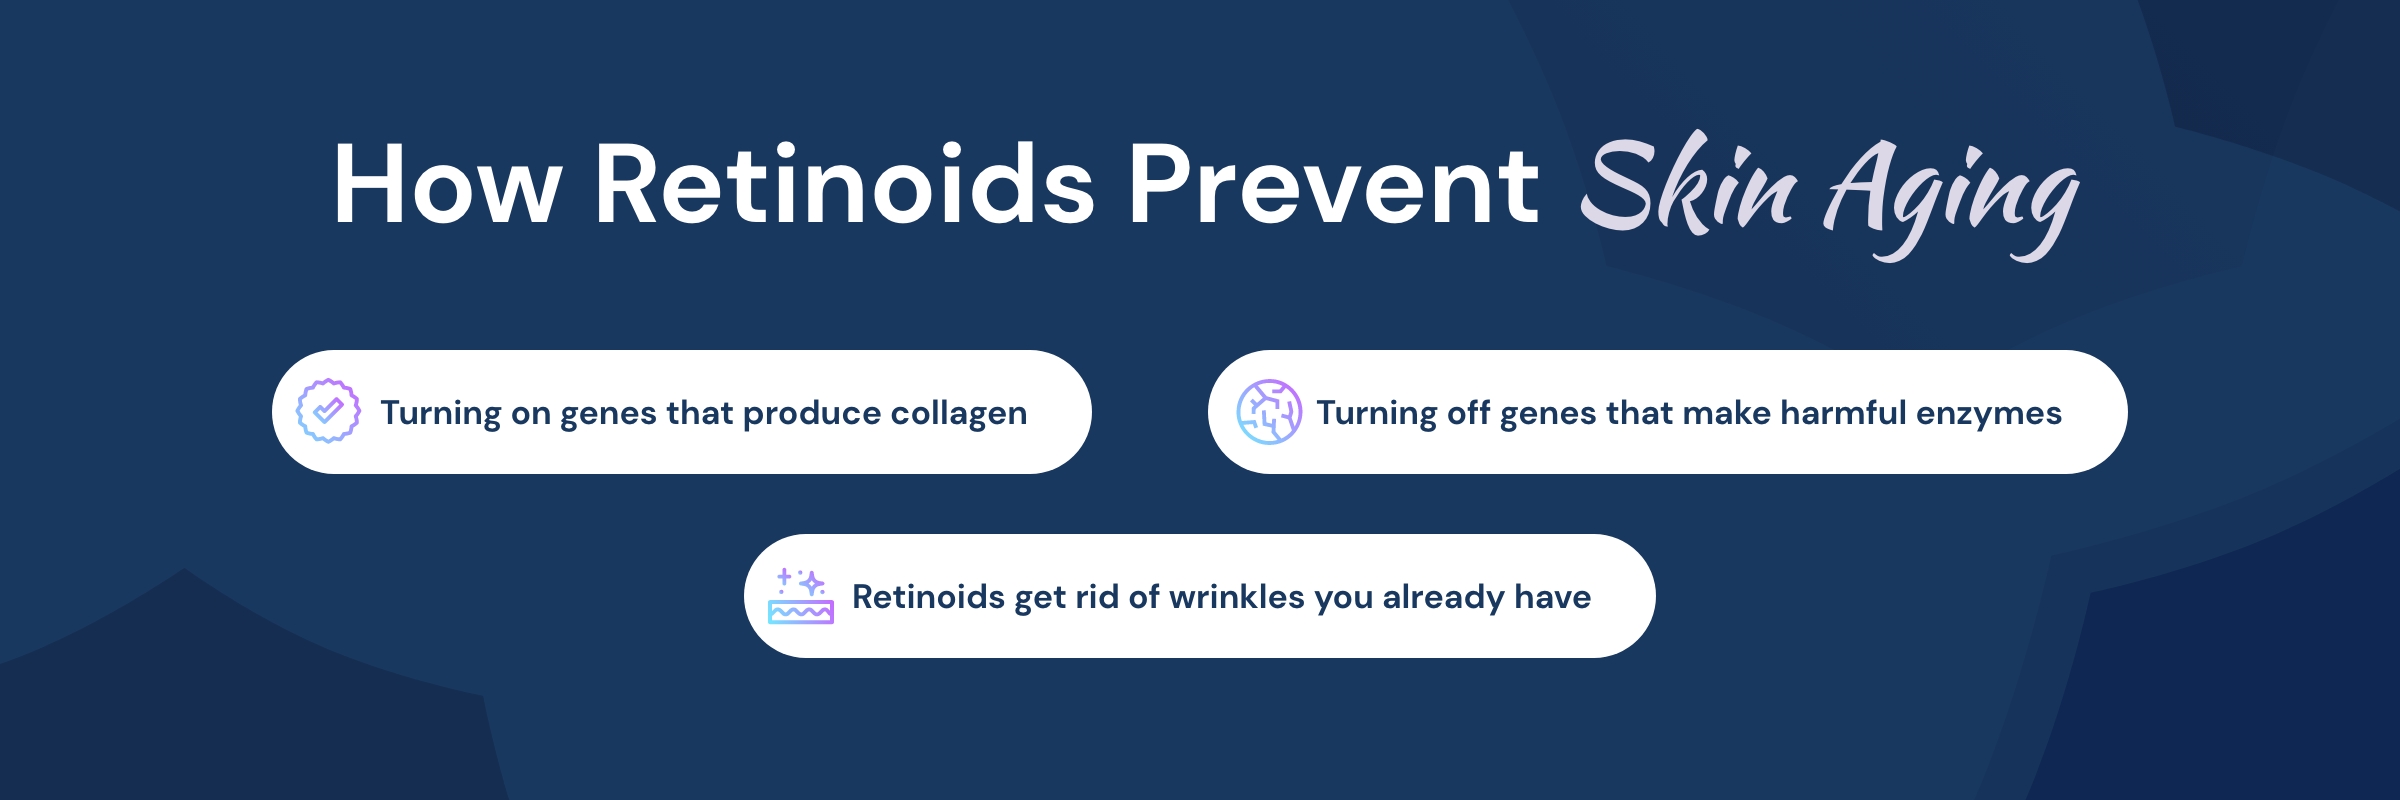 How Retinoids Prevent Skin Aging